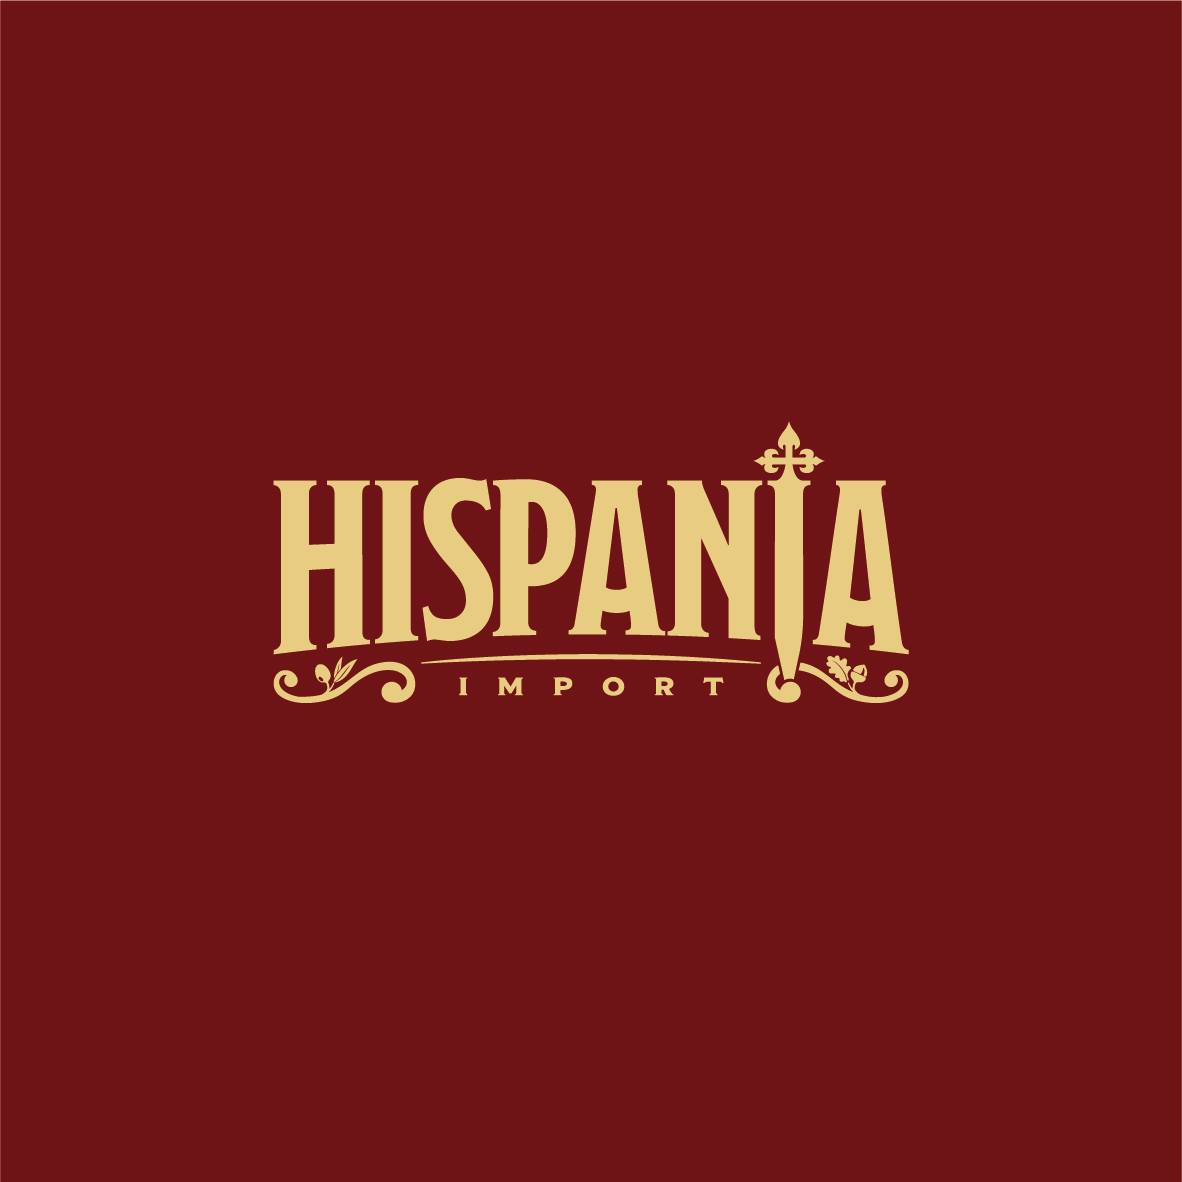 Hispania Import